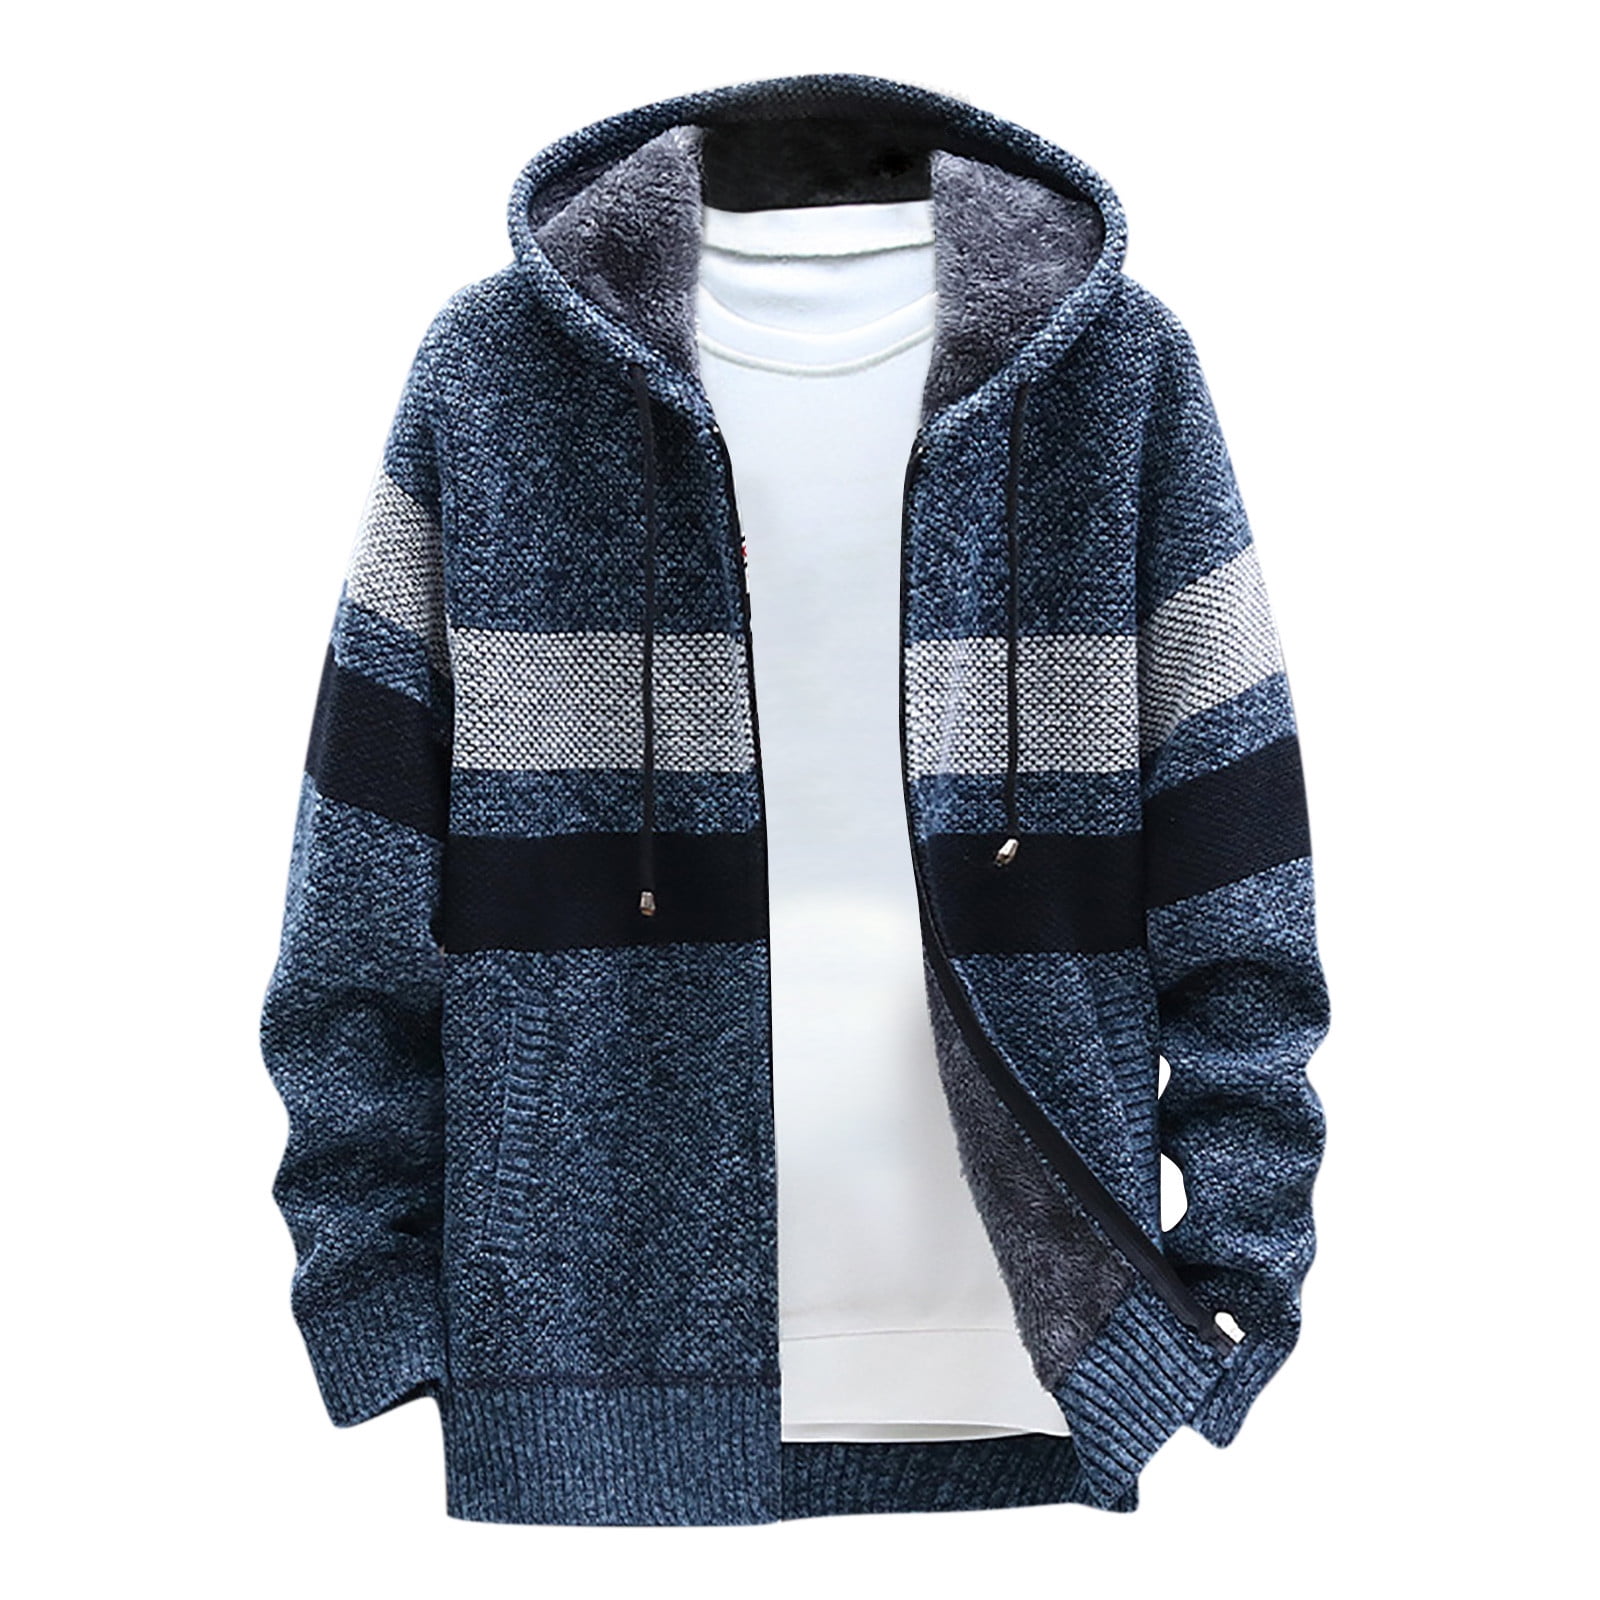 Warm-Up Knit Hoodie, Men's Sweatshirts